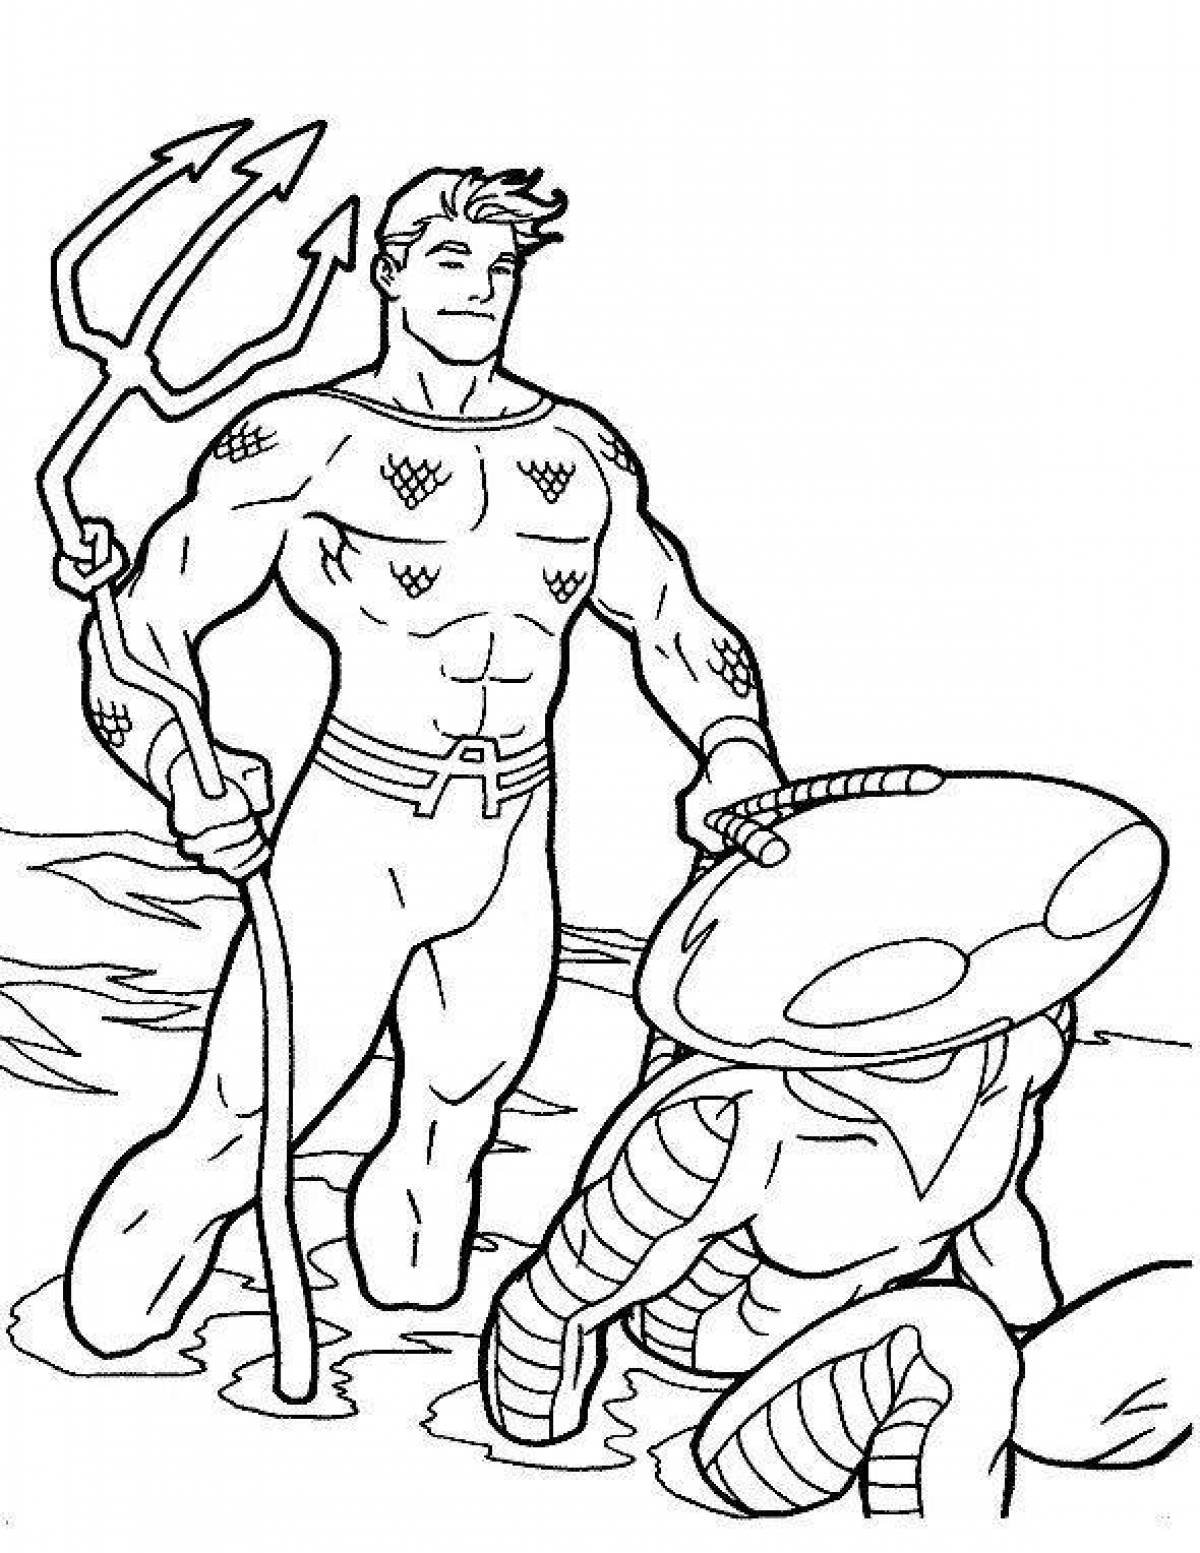 Aquaman fantasy coloring book